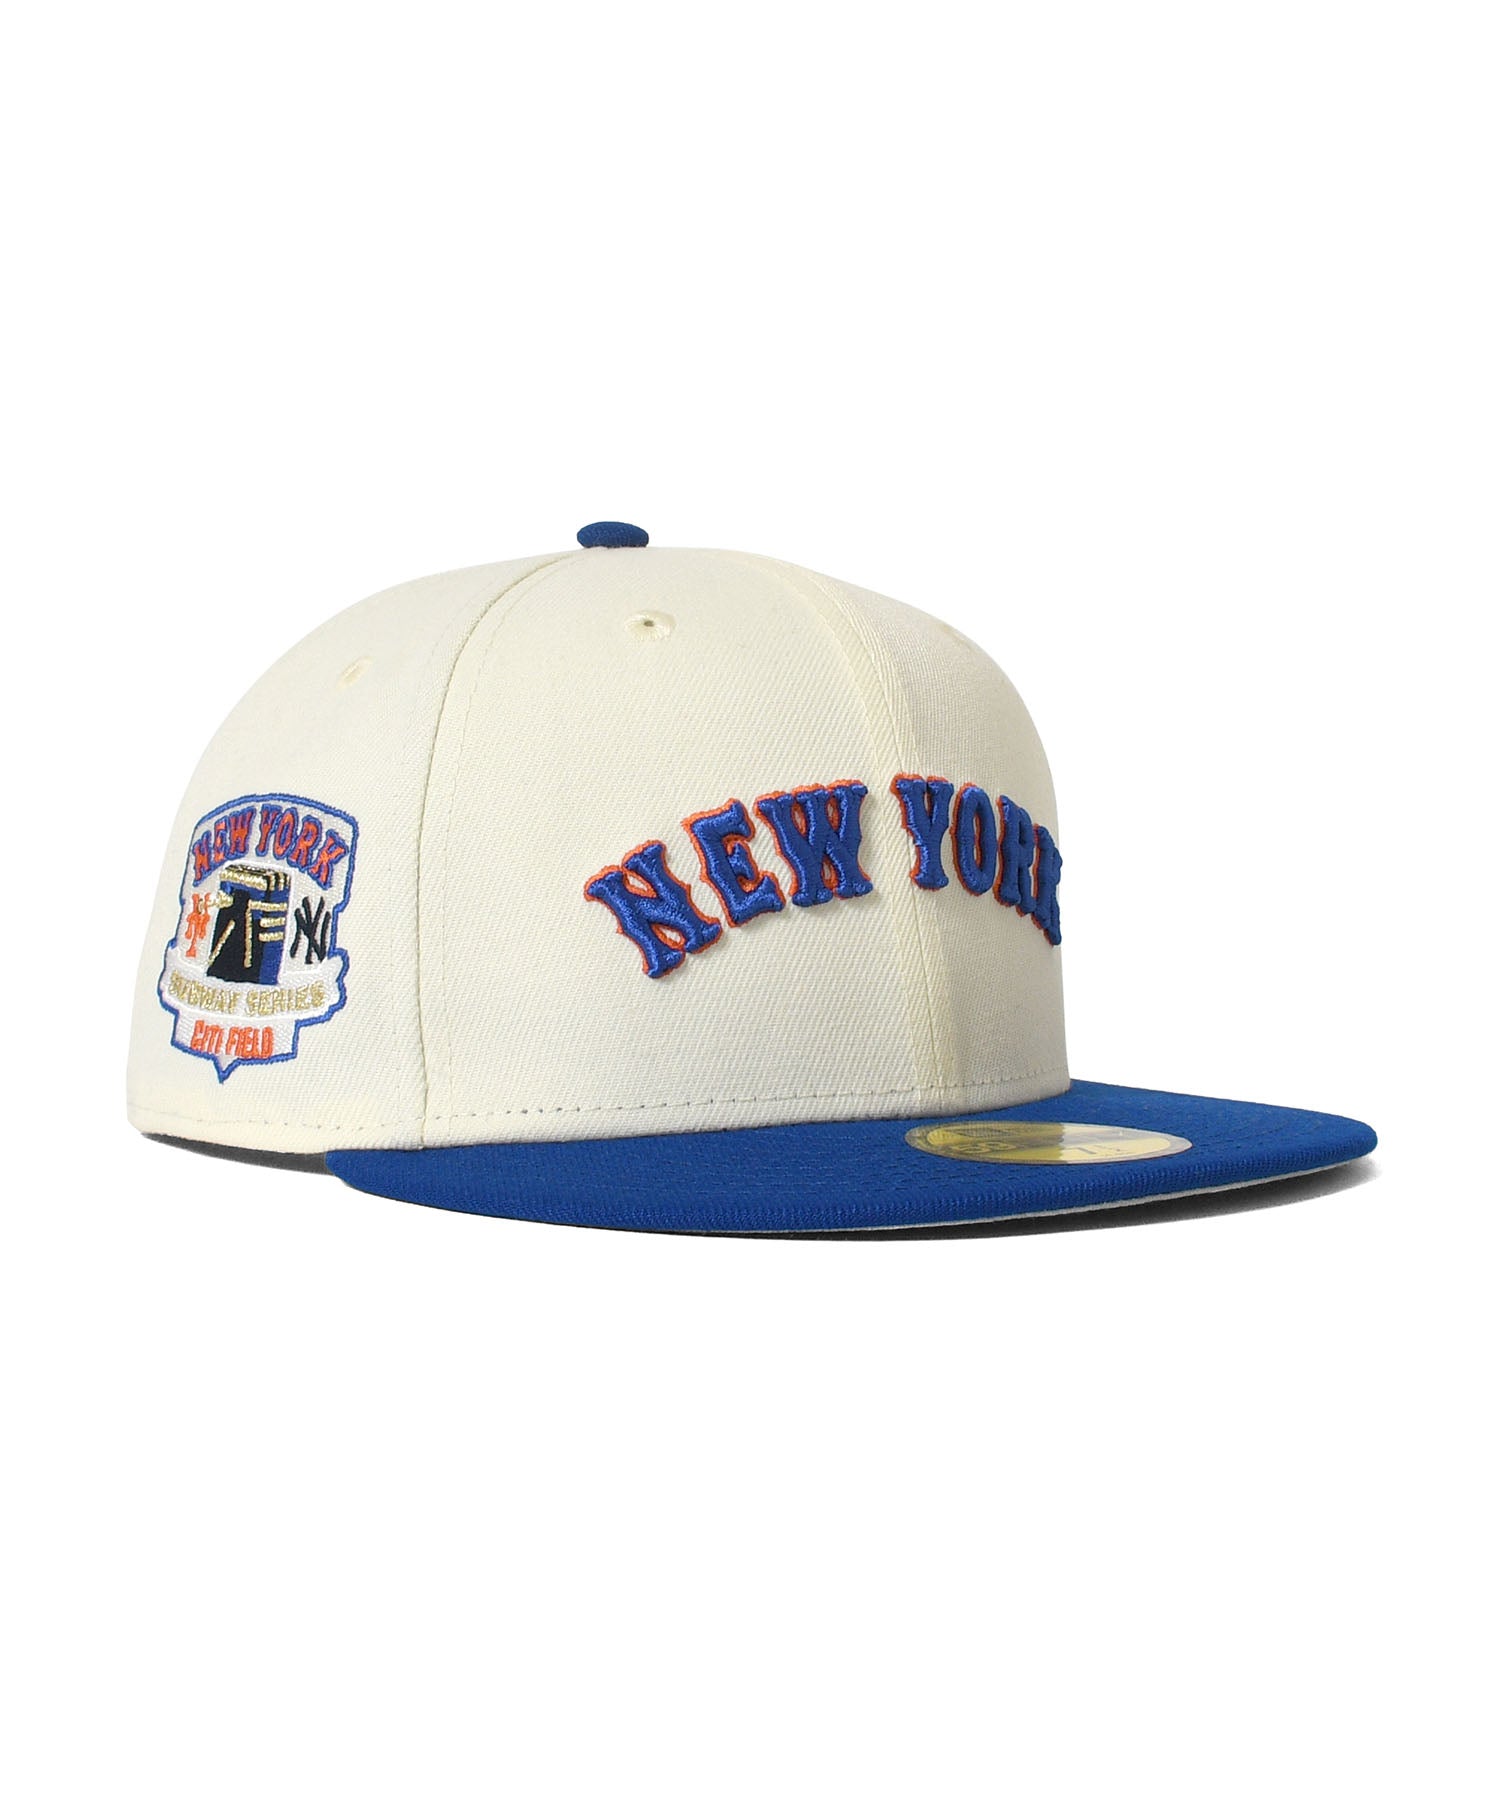 New York Mets New Era 59Fifty Hat Natural Royal